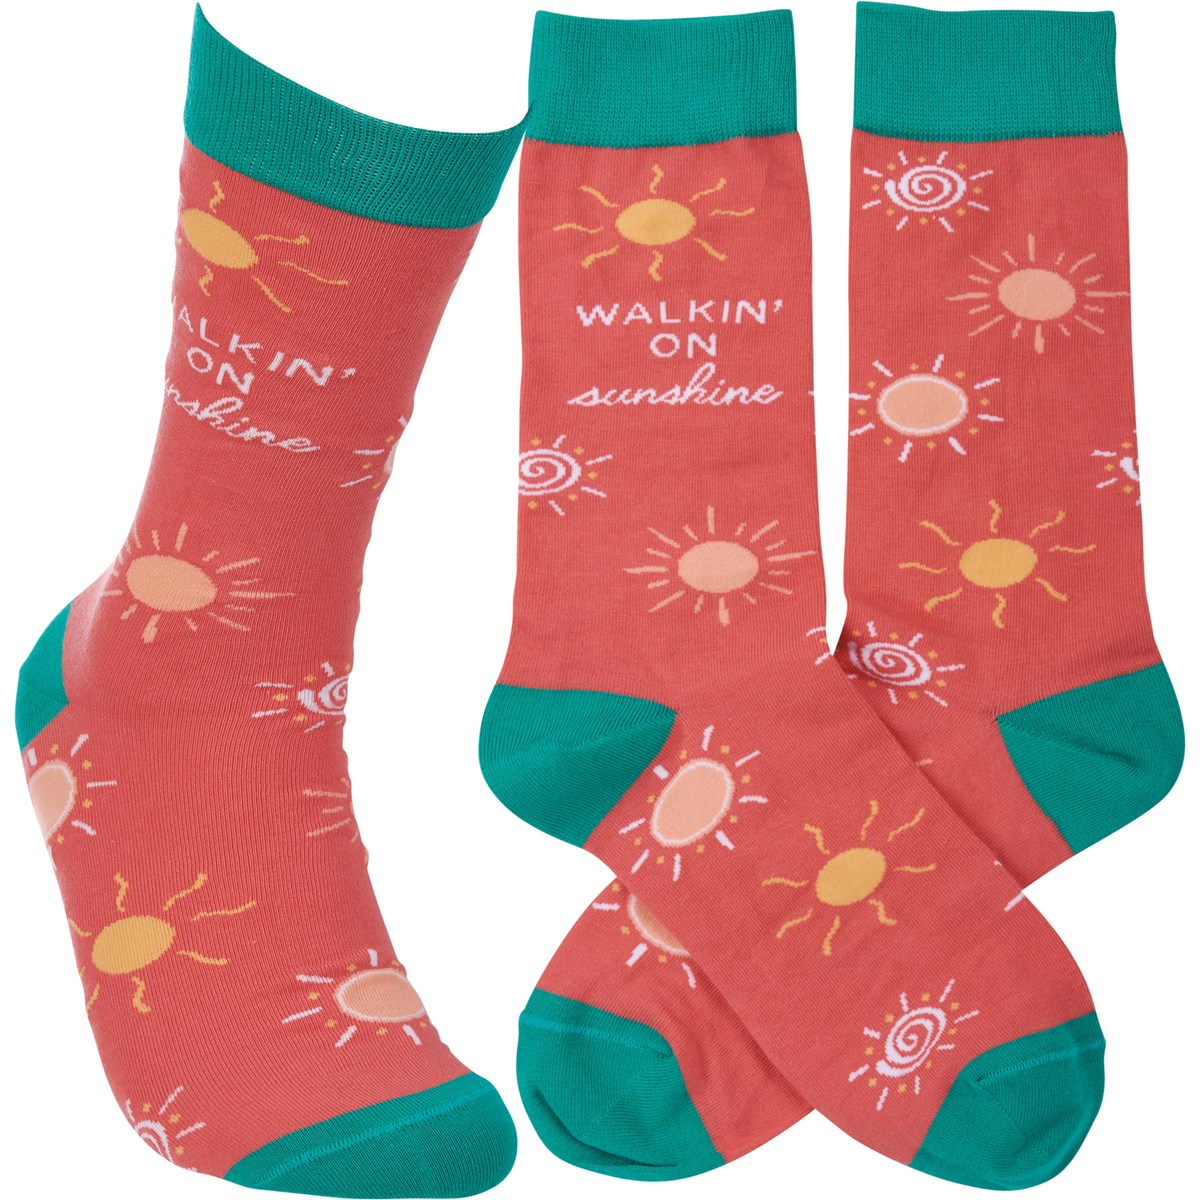 Socks - Walkin' On Sunshine - One Size Fits Most - Cotton, Nylon, Spandex